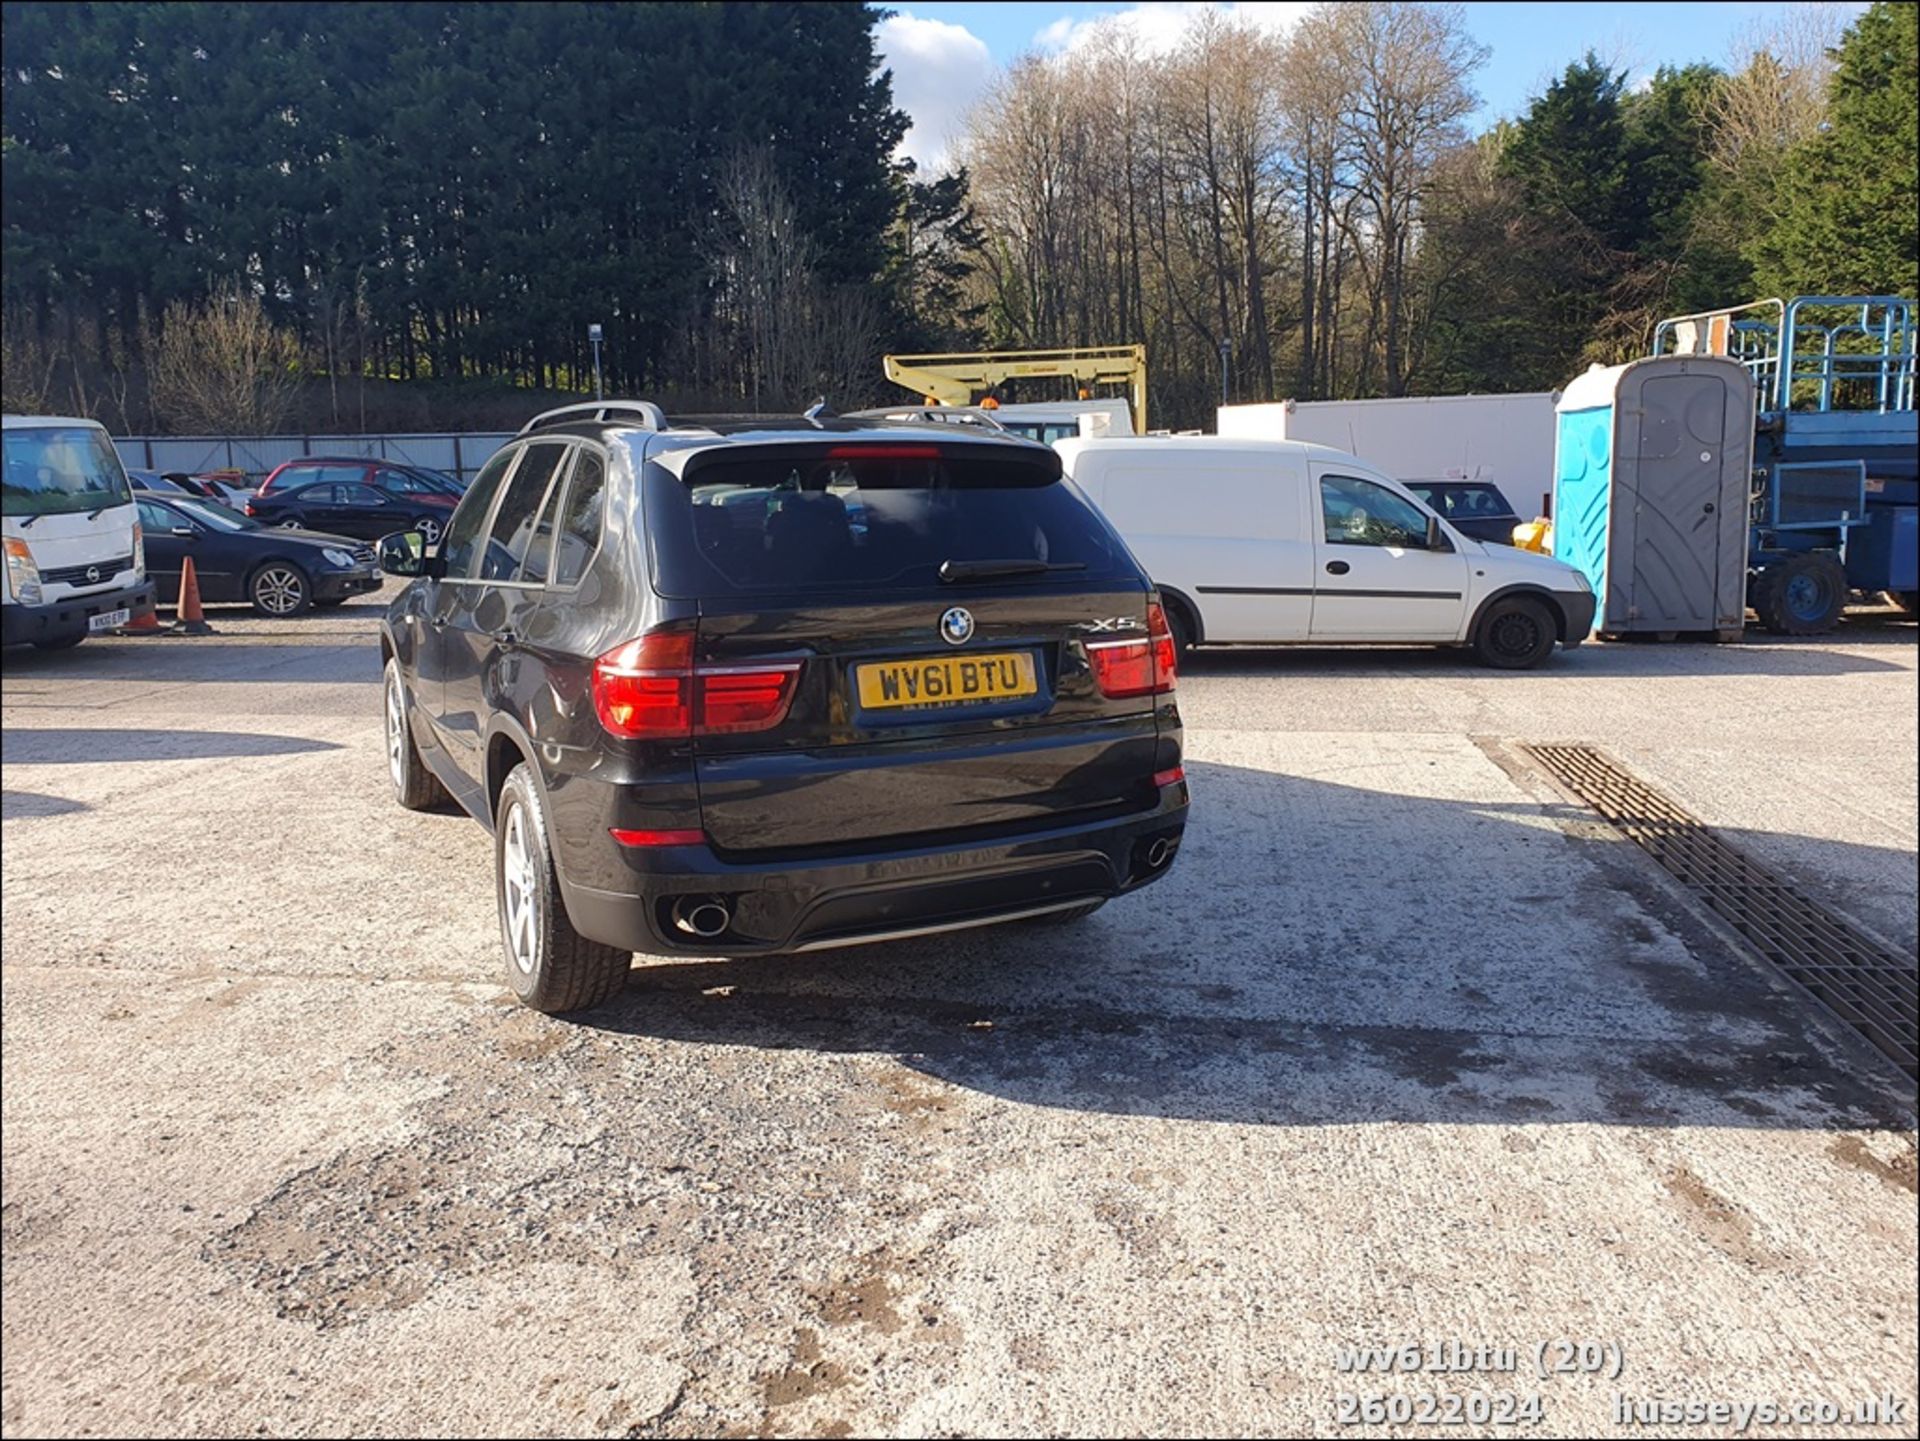 11/61 BMW X5 XDRIVE30D SE AUTO - 2993cc 5dr Estate (Black, 85k) - Image 21 of 51